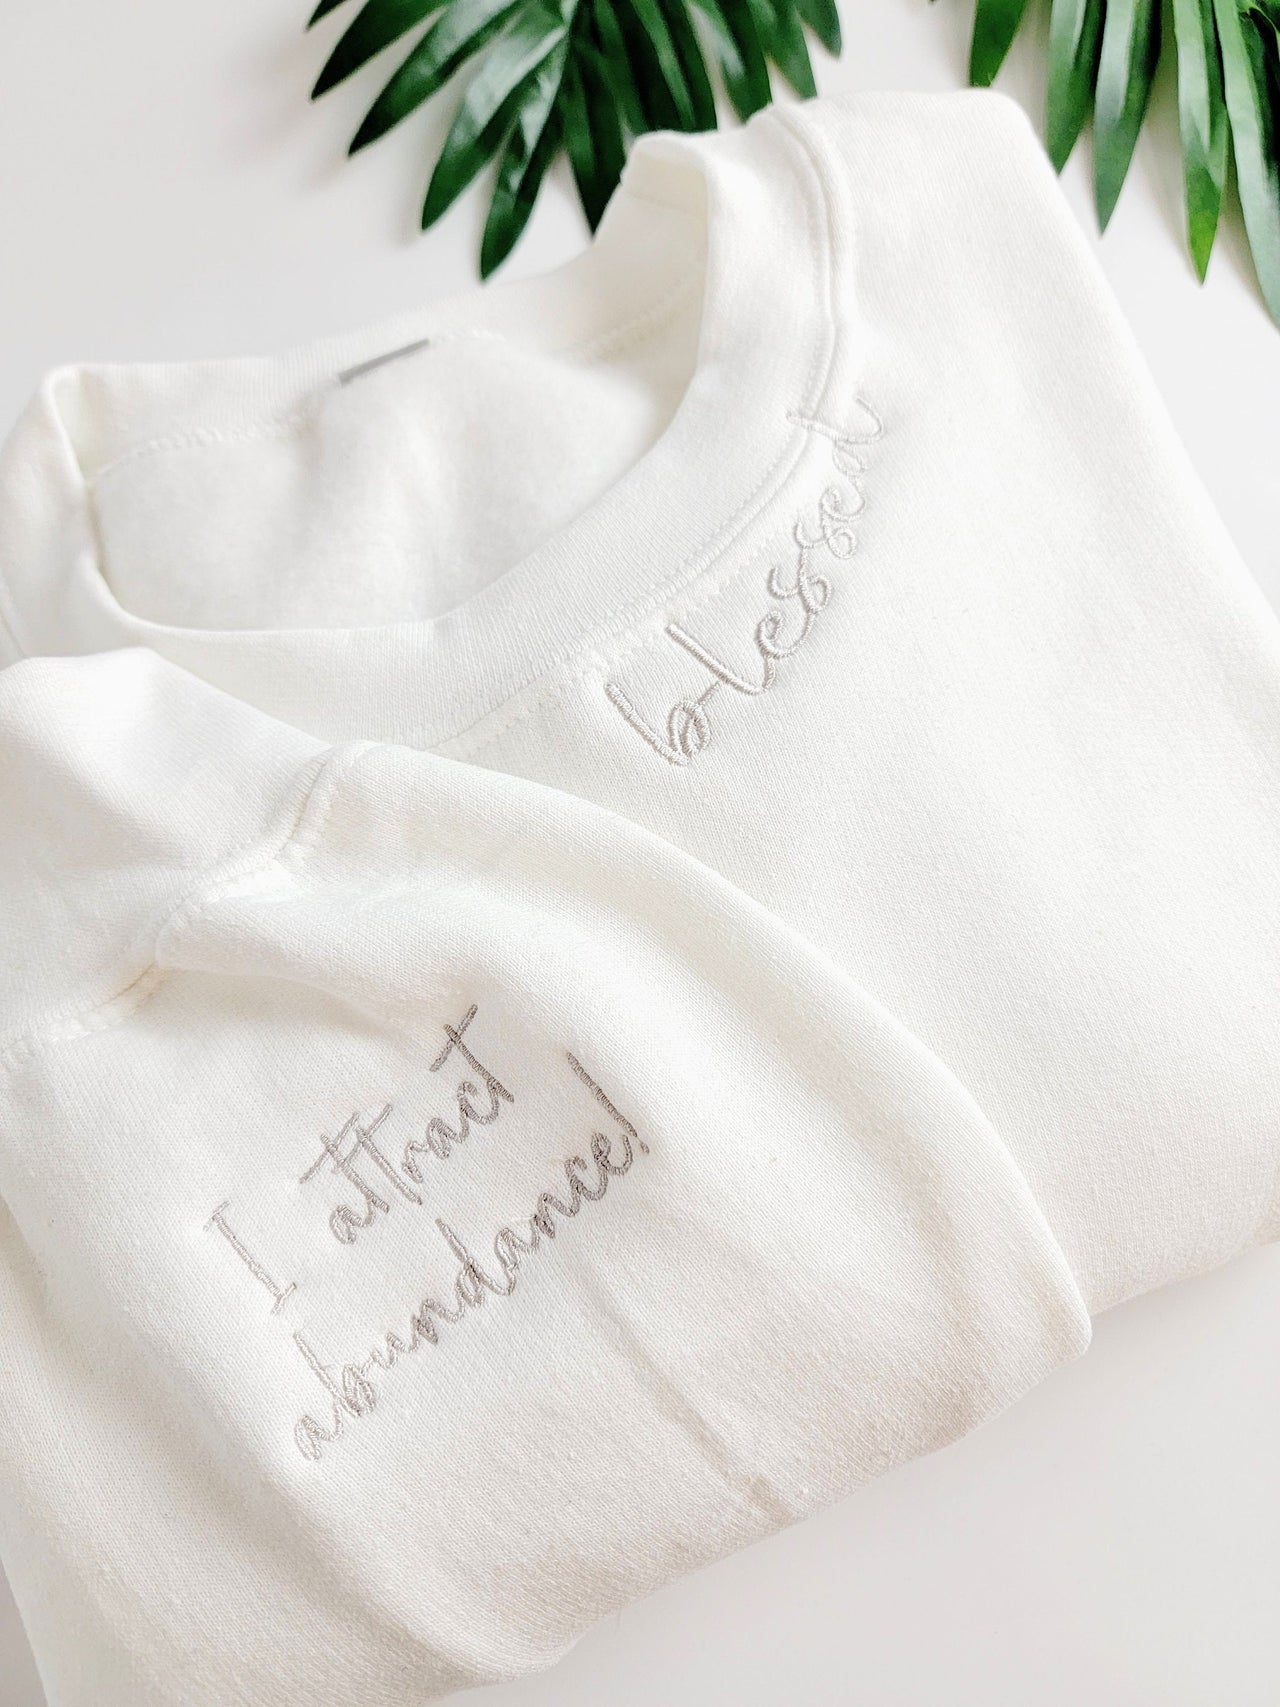 Blessed Embroidered Sweatshirt For Women - Neckline Embroidered Sleeve - Affirmation Shirt - Christian Sweatshirt - Trendy Sweatshirt